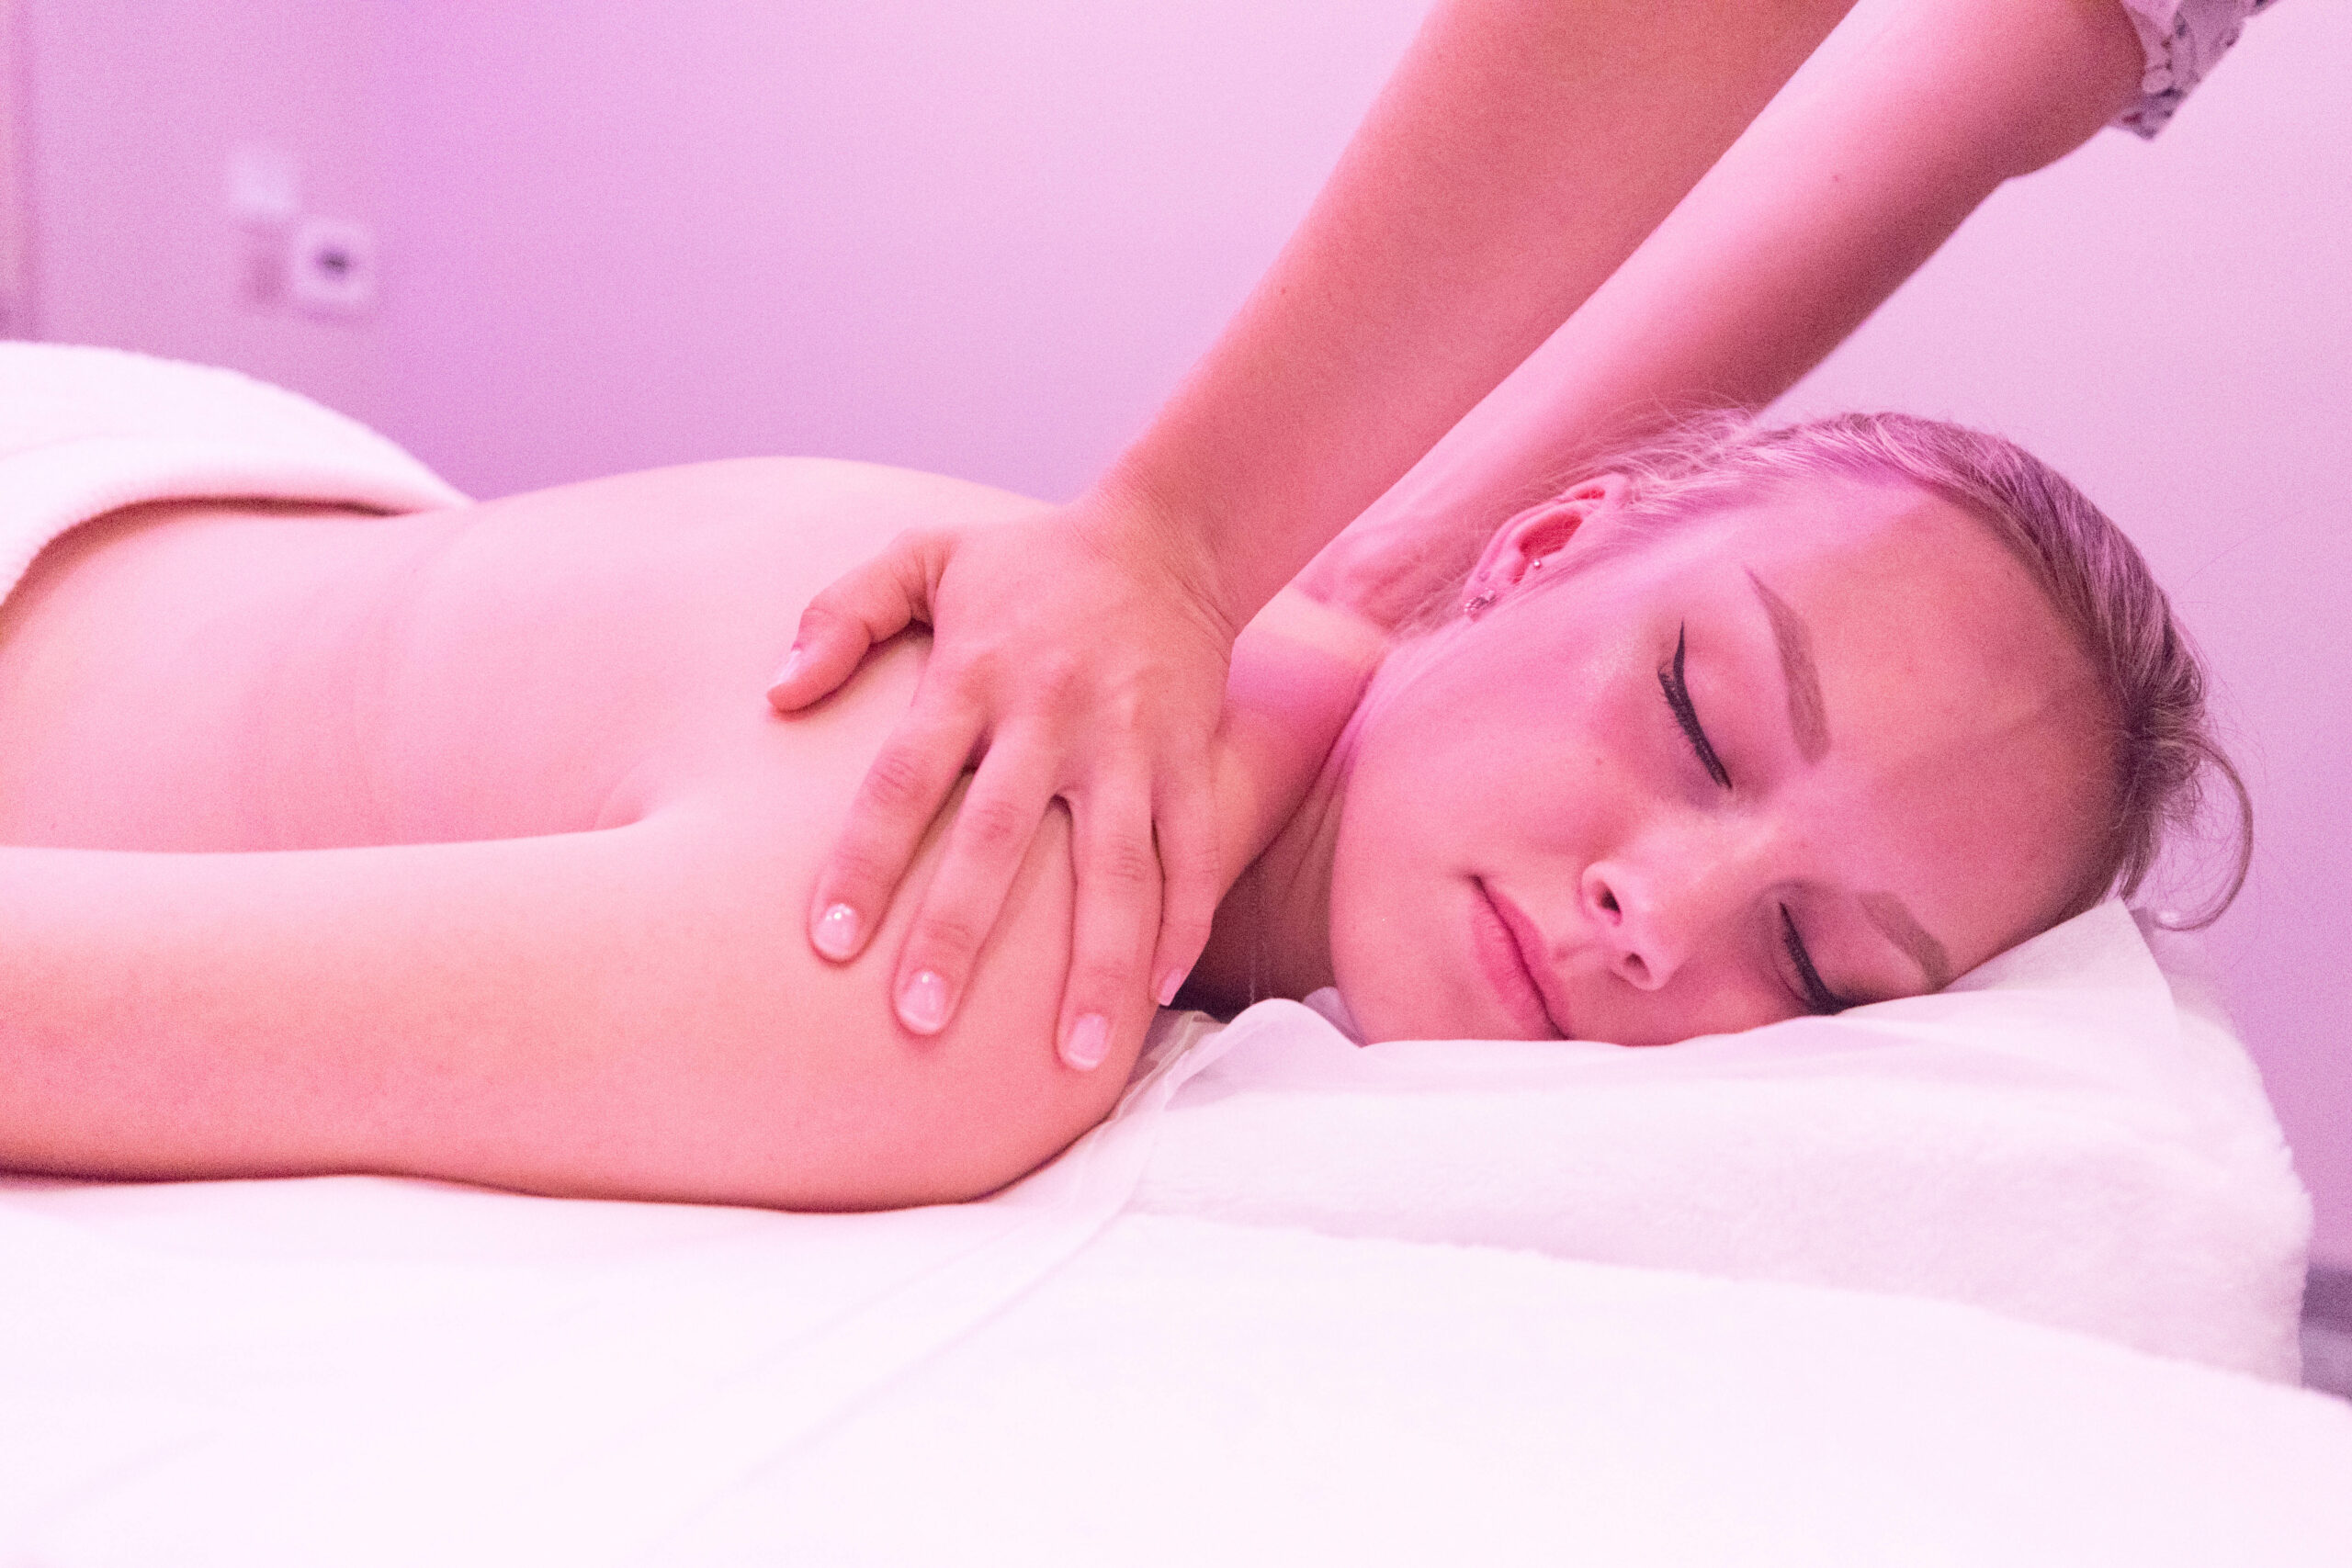 Salle de massage - spa marotte massage